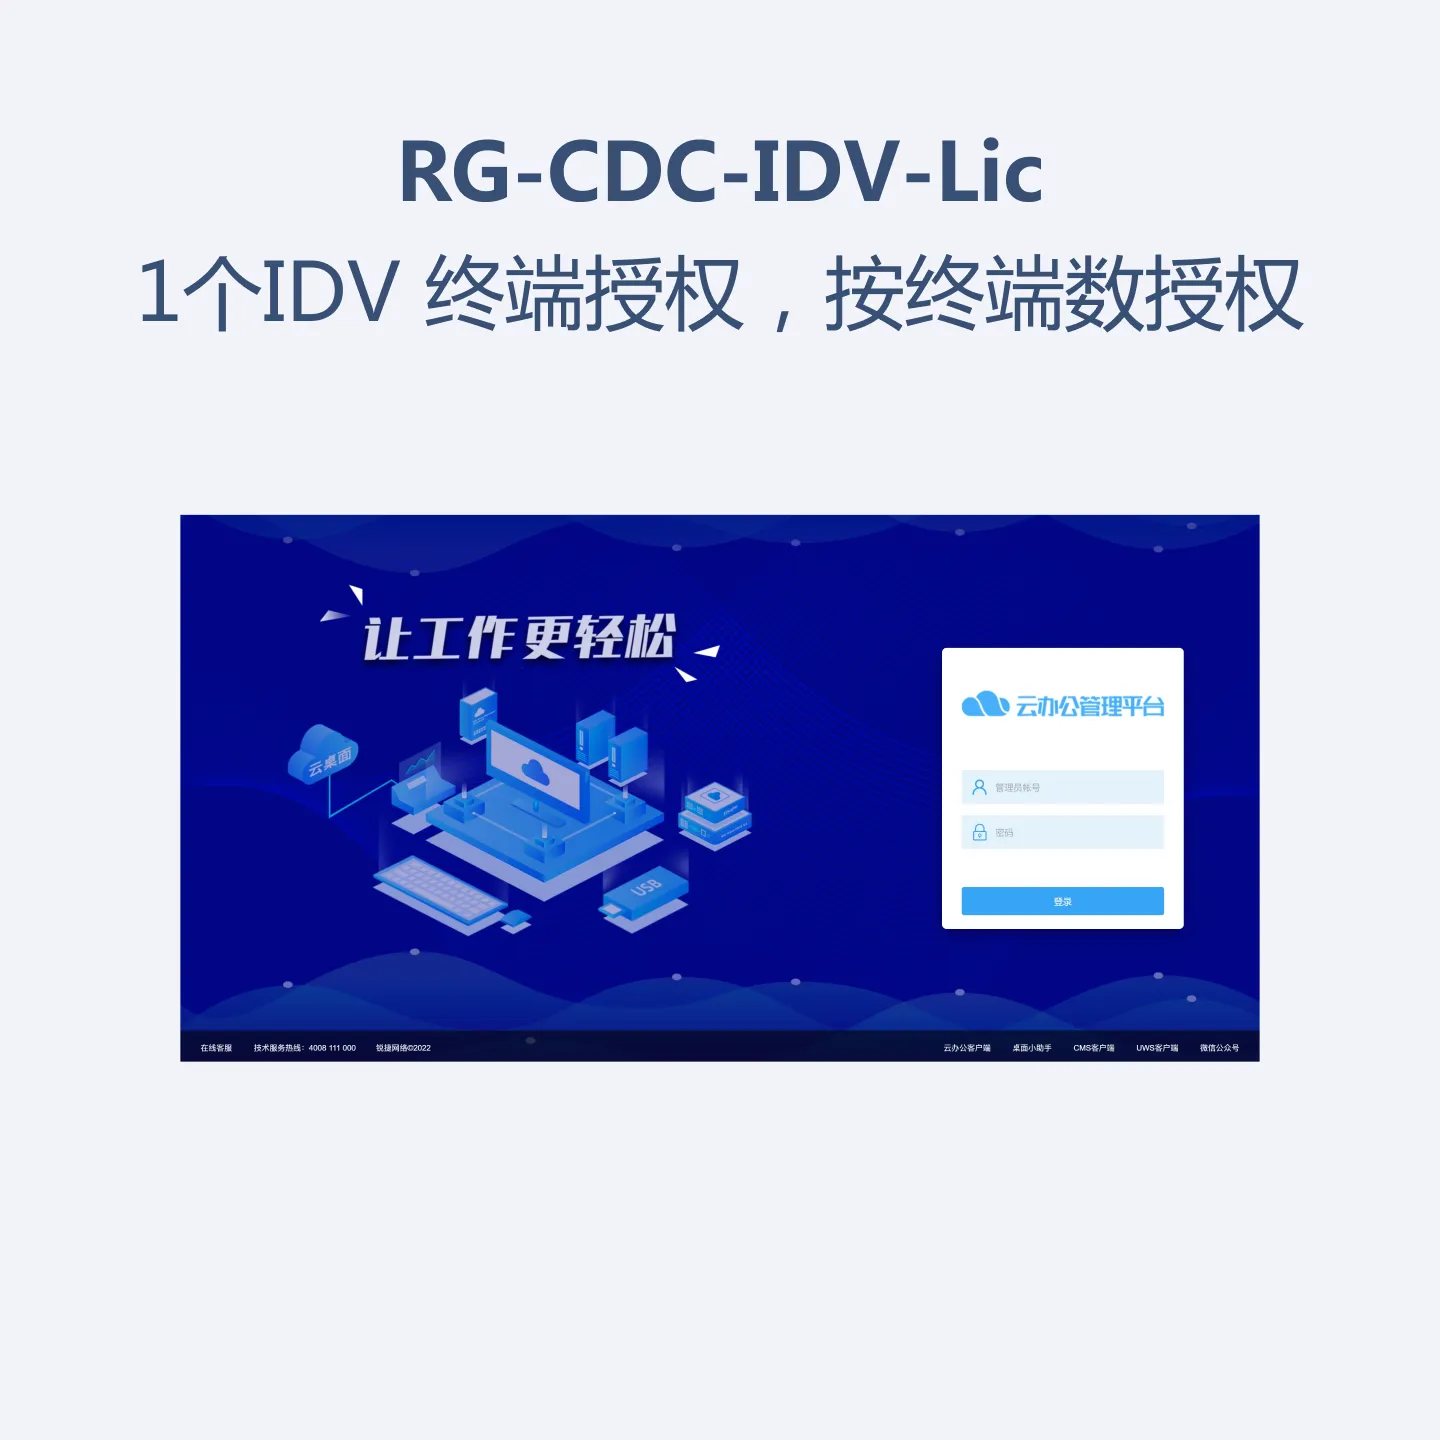 RG-CDC-IDV-Lic